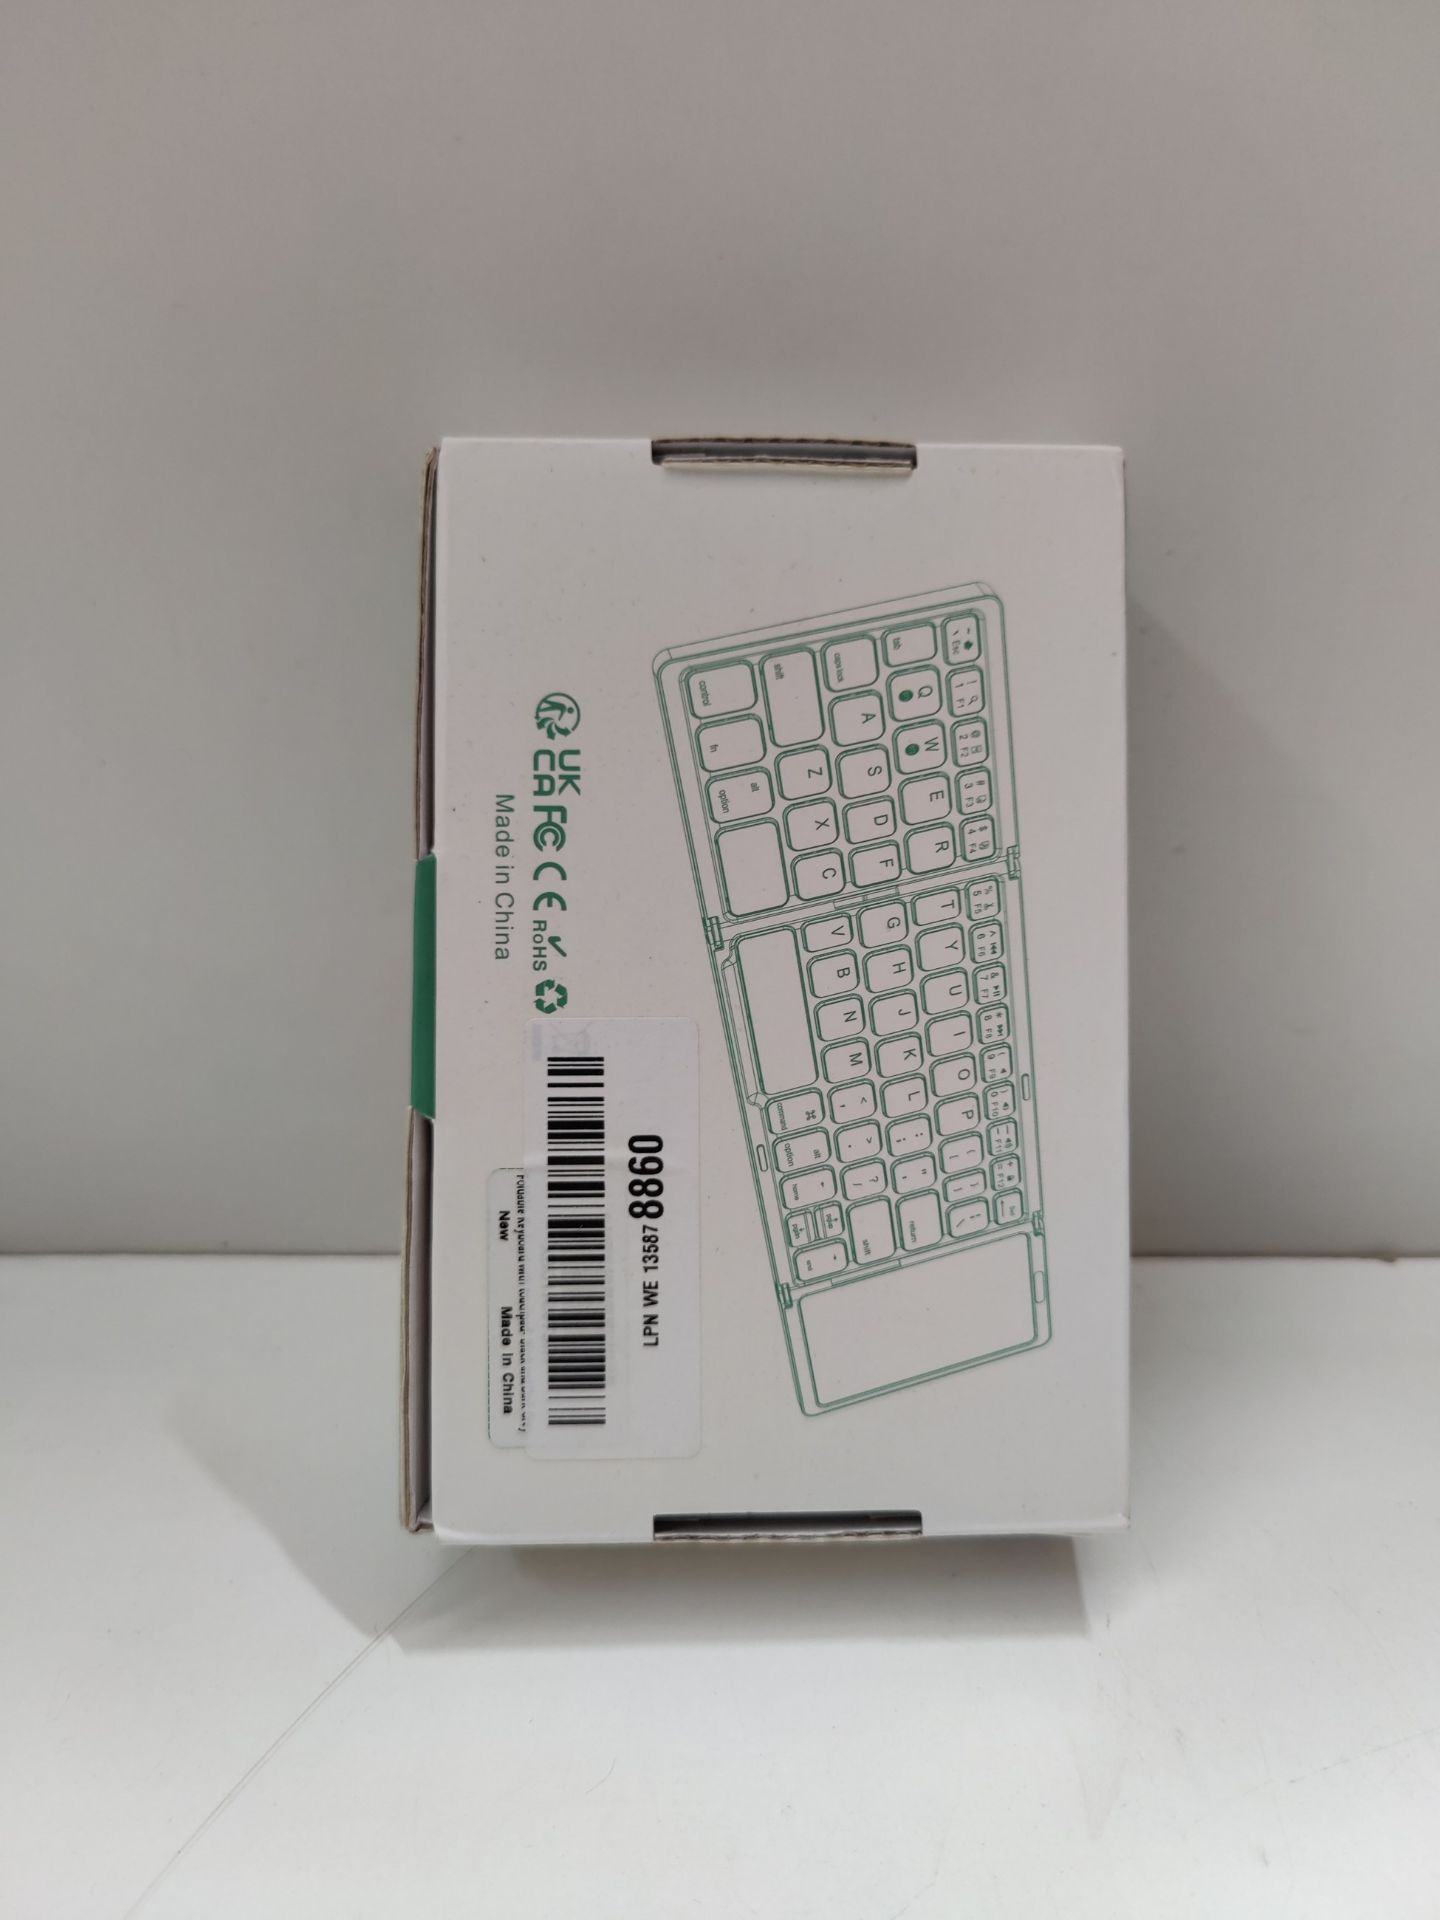 RRP £30.14 Seenda Foldable Keyboard - Image 2 of 2